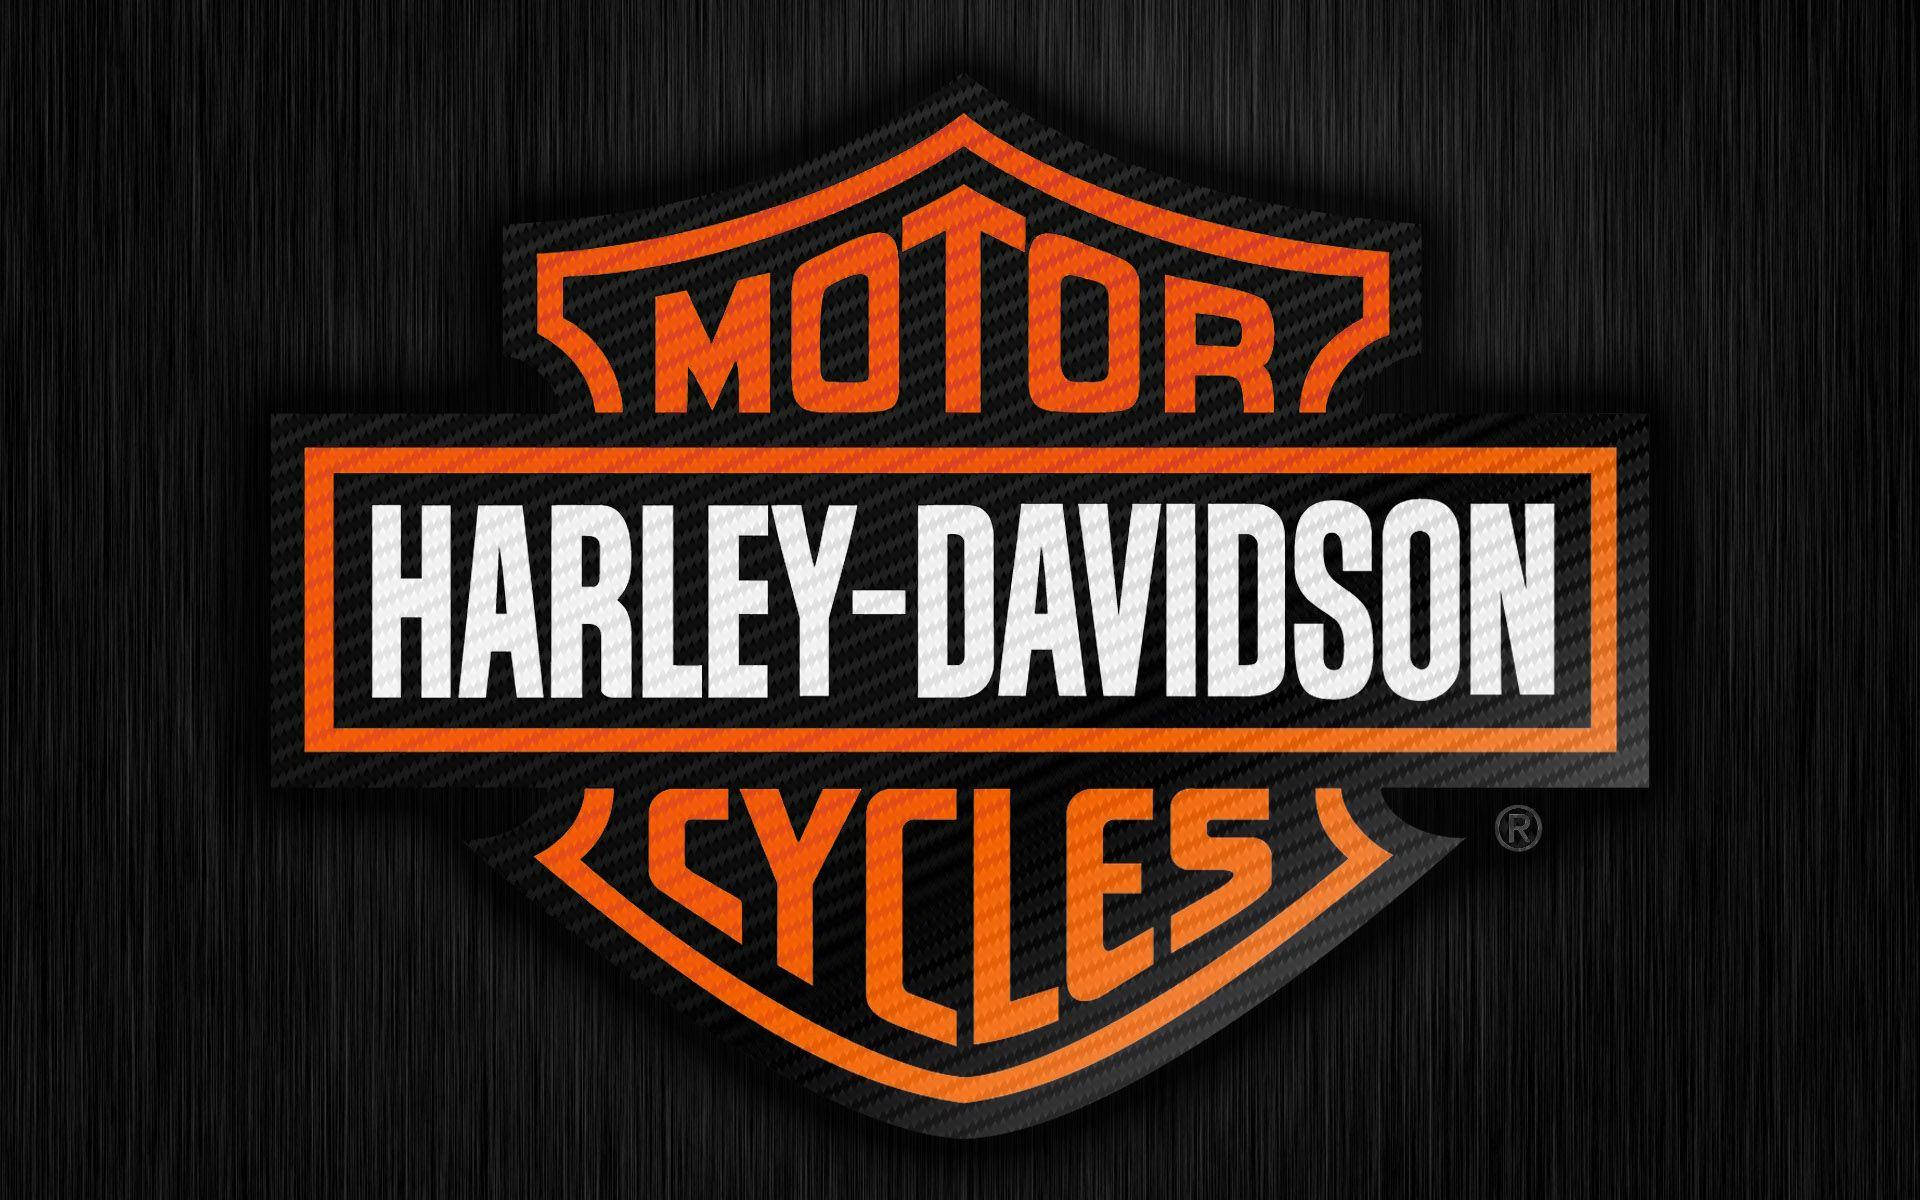 Harley Davidson 1920X1200 Wallpaper and Background Image